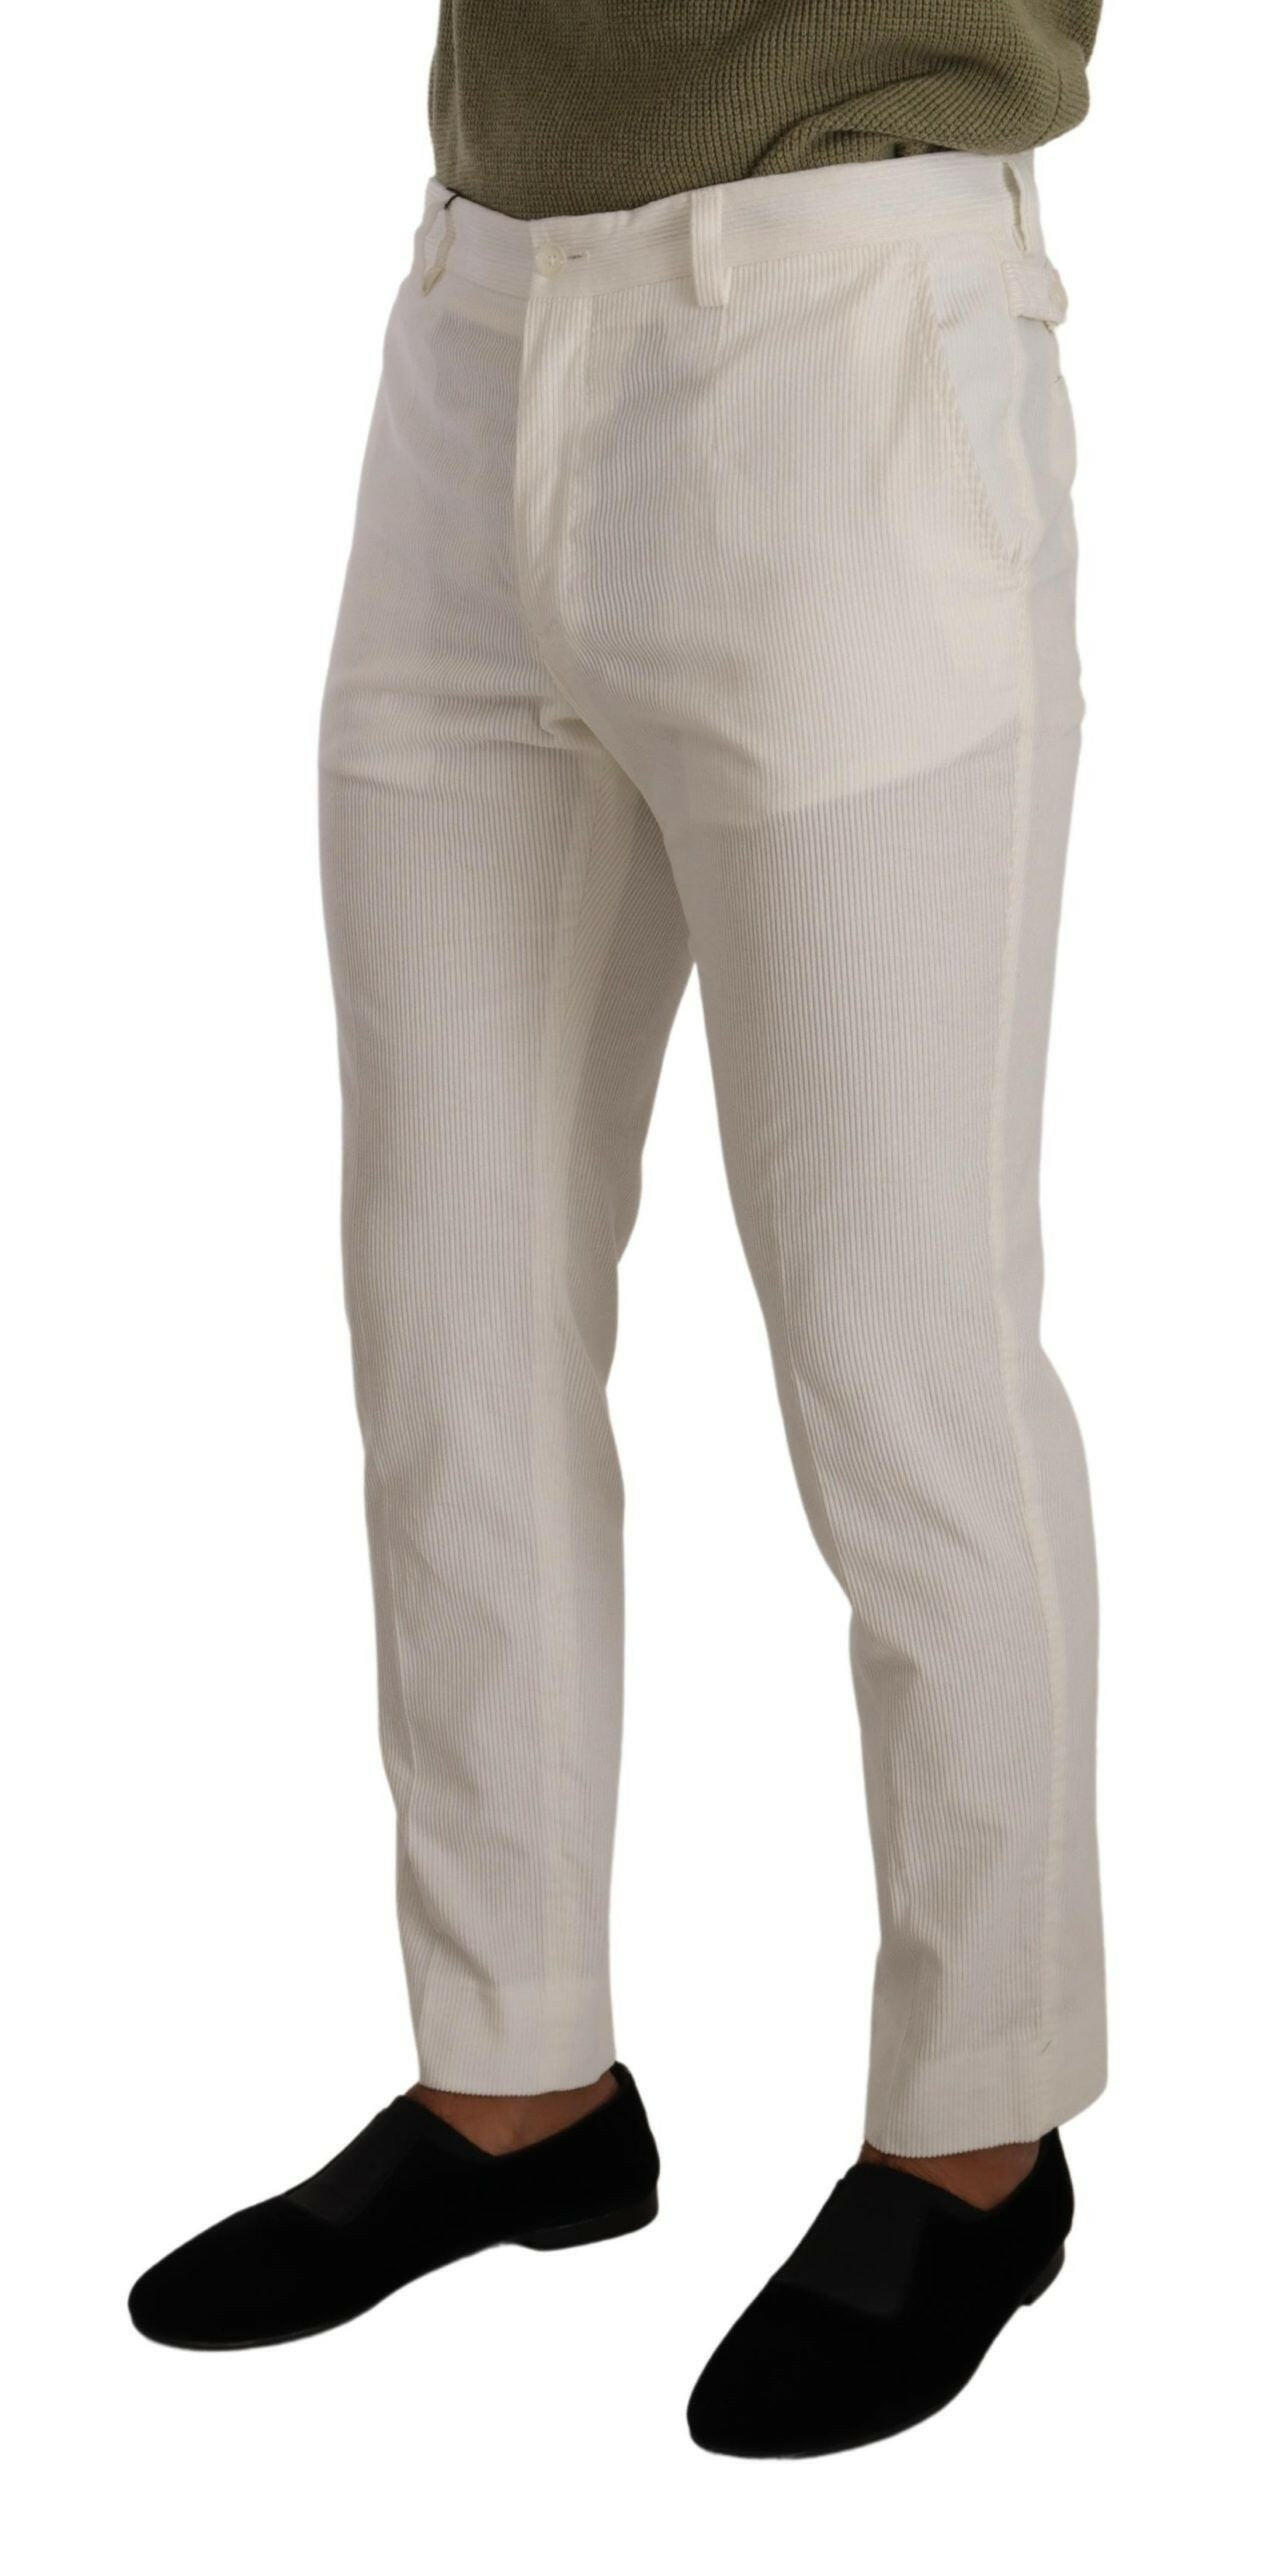 Dolce & Gabbana White Cotton Skinny Corduroy Trouser Pants - GENUINE AUTHENTIC BRAND LLC  